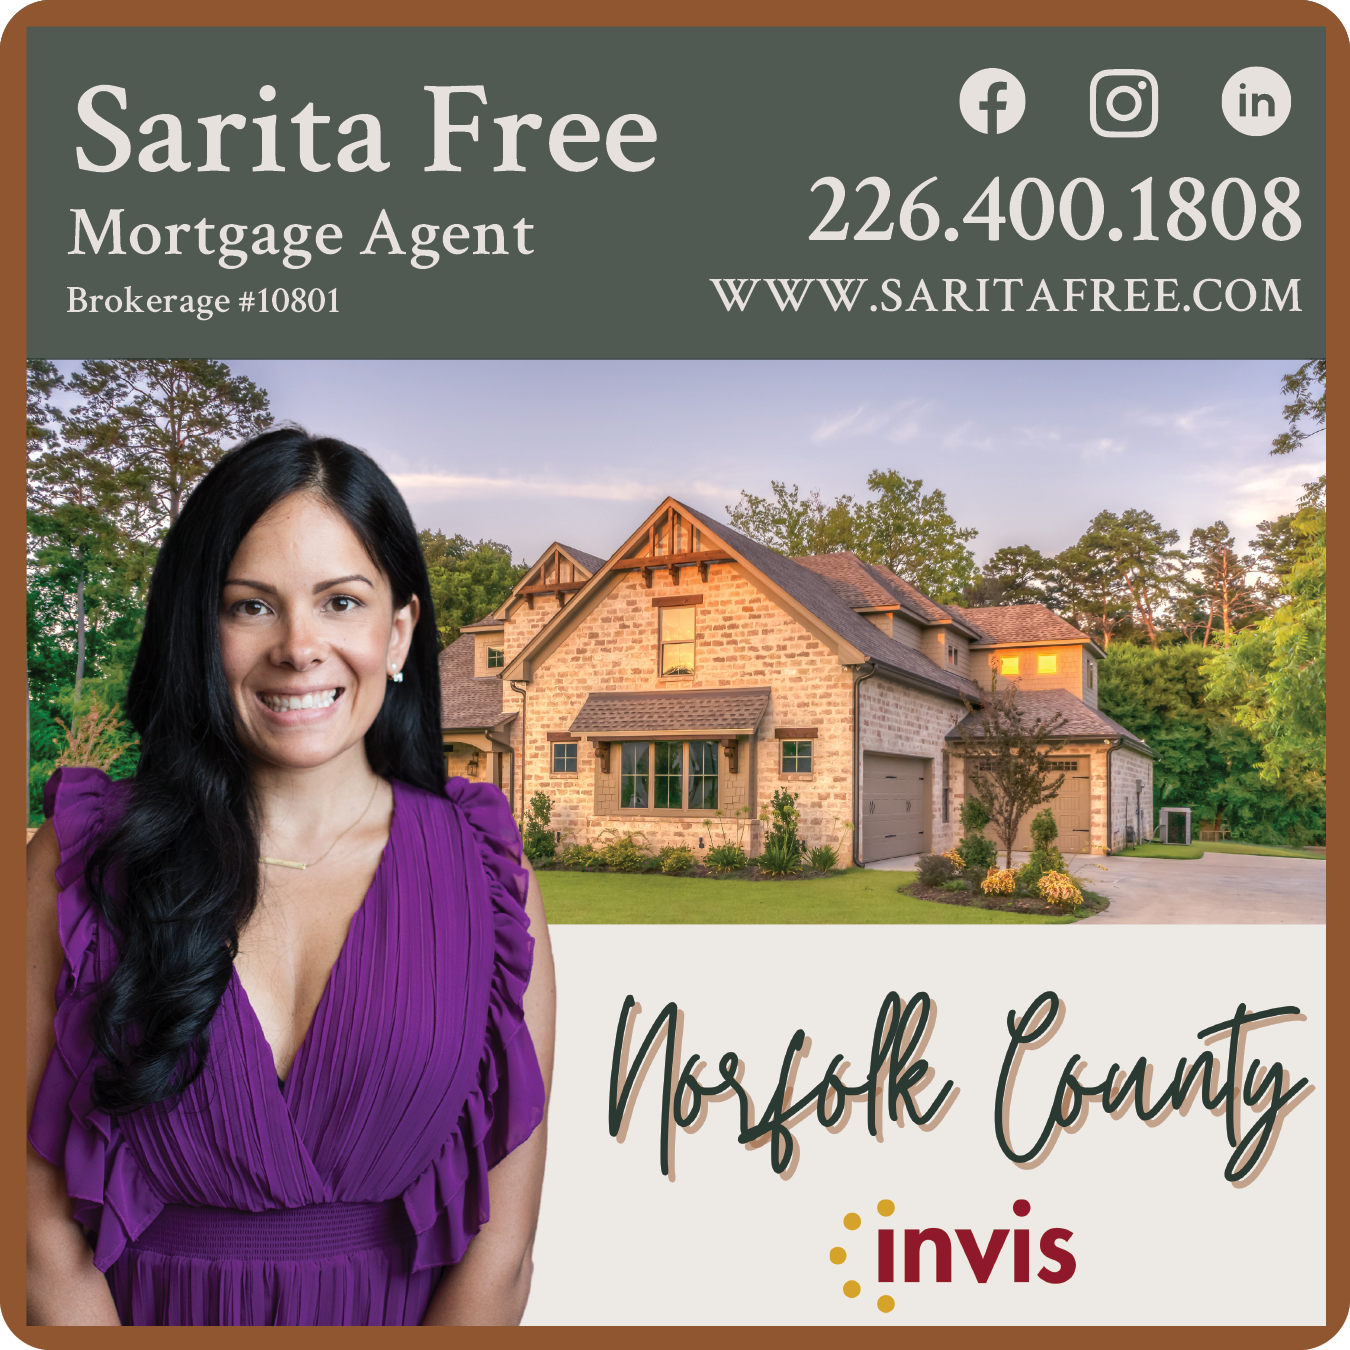 Sarita Free Mortgage Agent